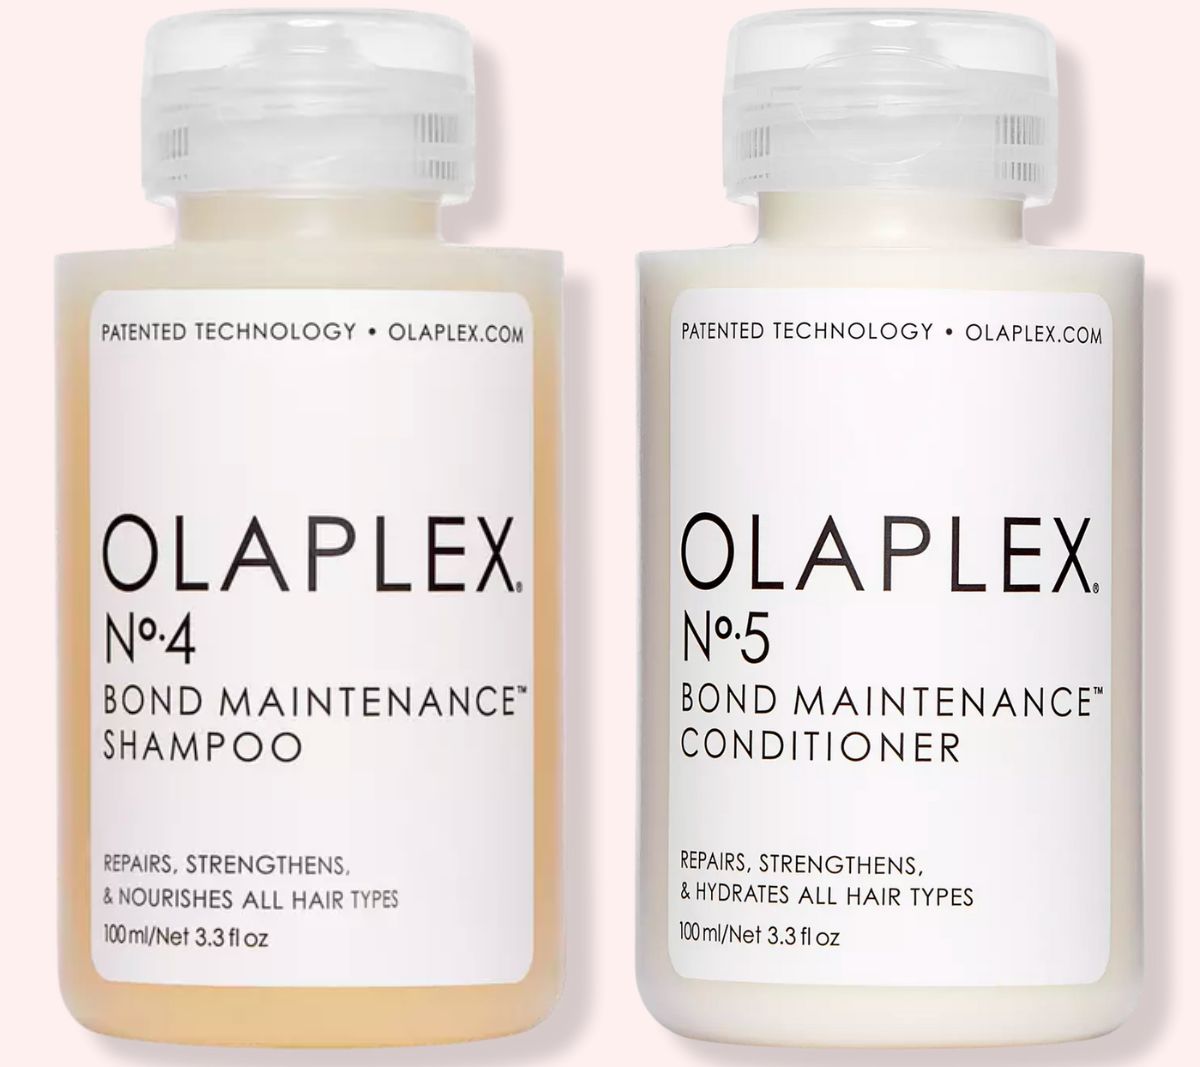 Olaplex Travel Size No.4 Bond Maintenance Shampoo and conditioner product images